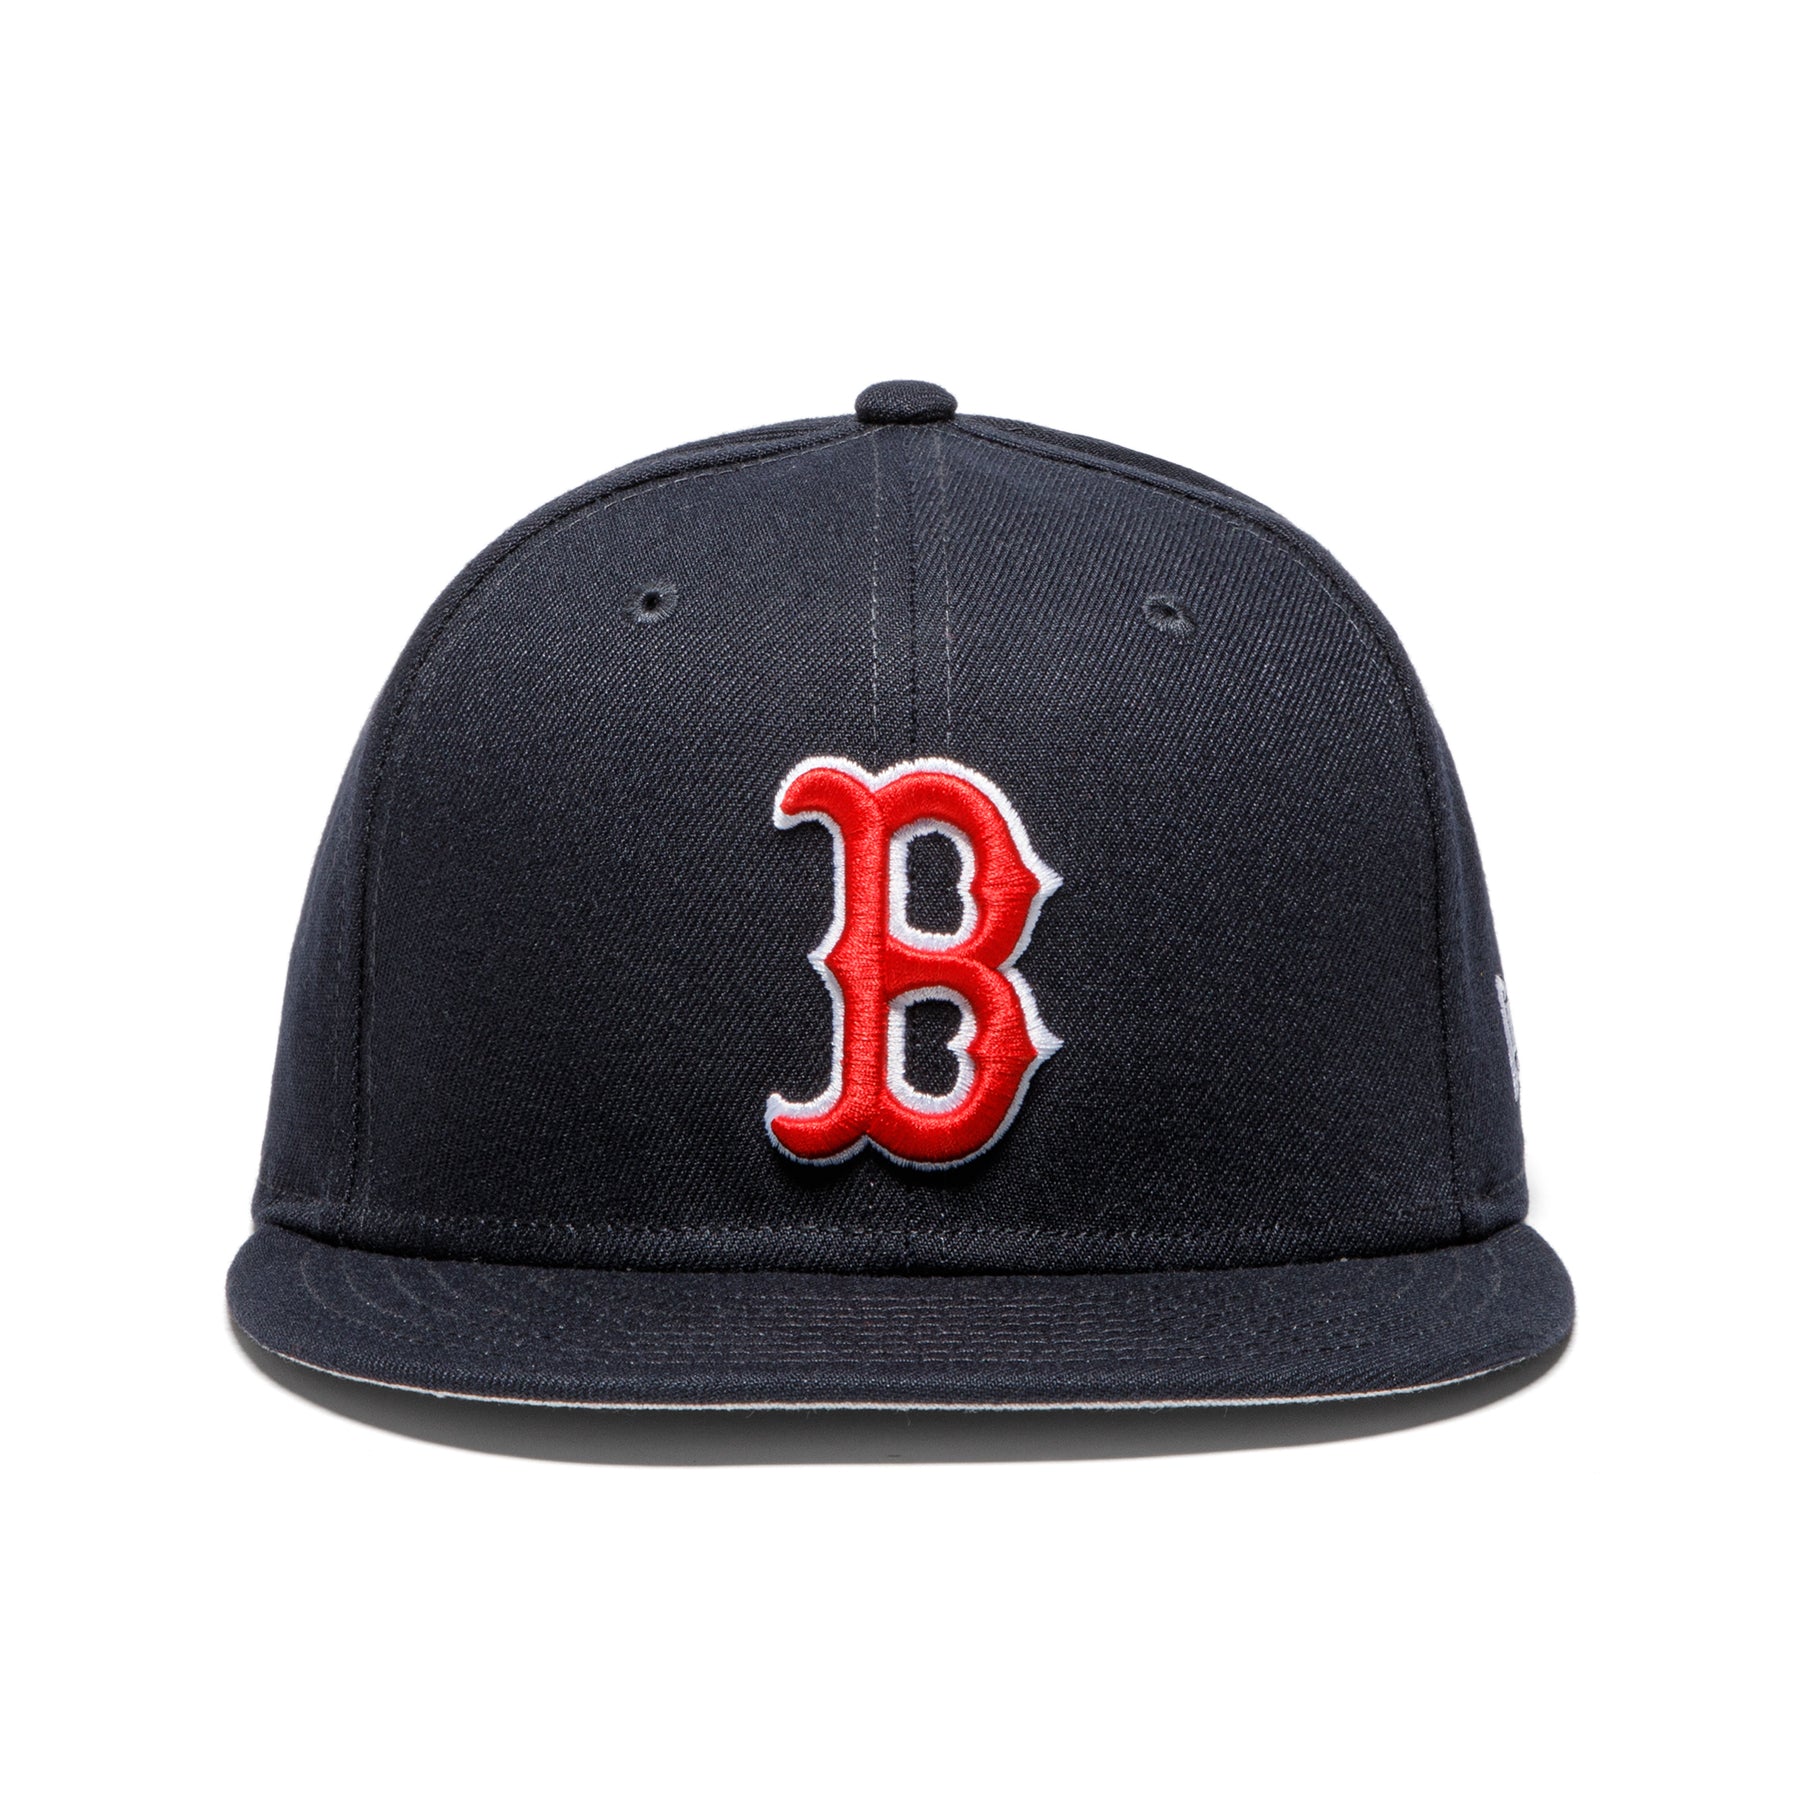 Boston Red Sox Navy MLB Cotton Fabric